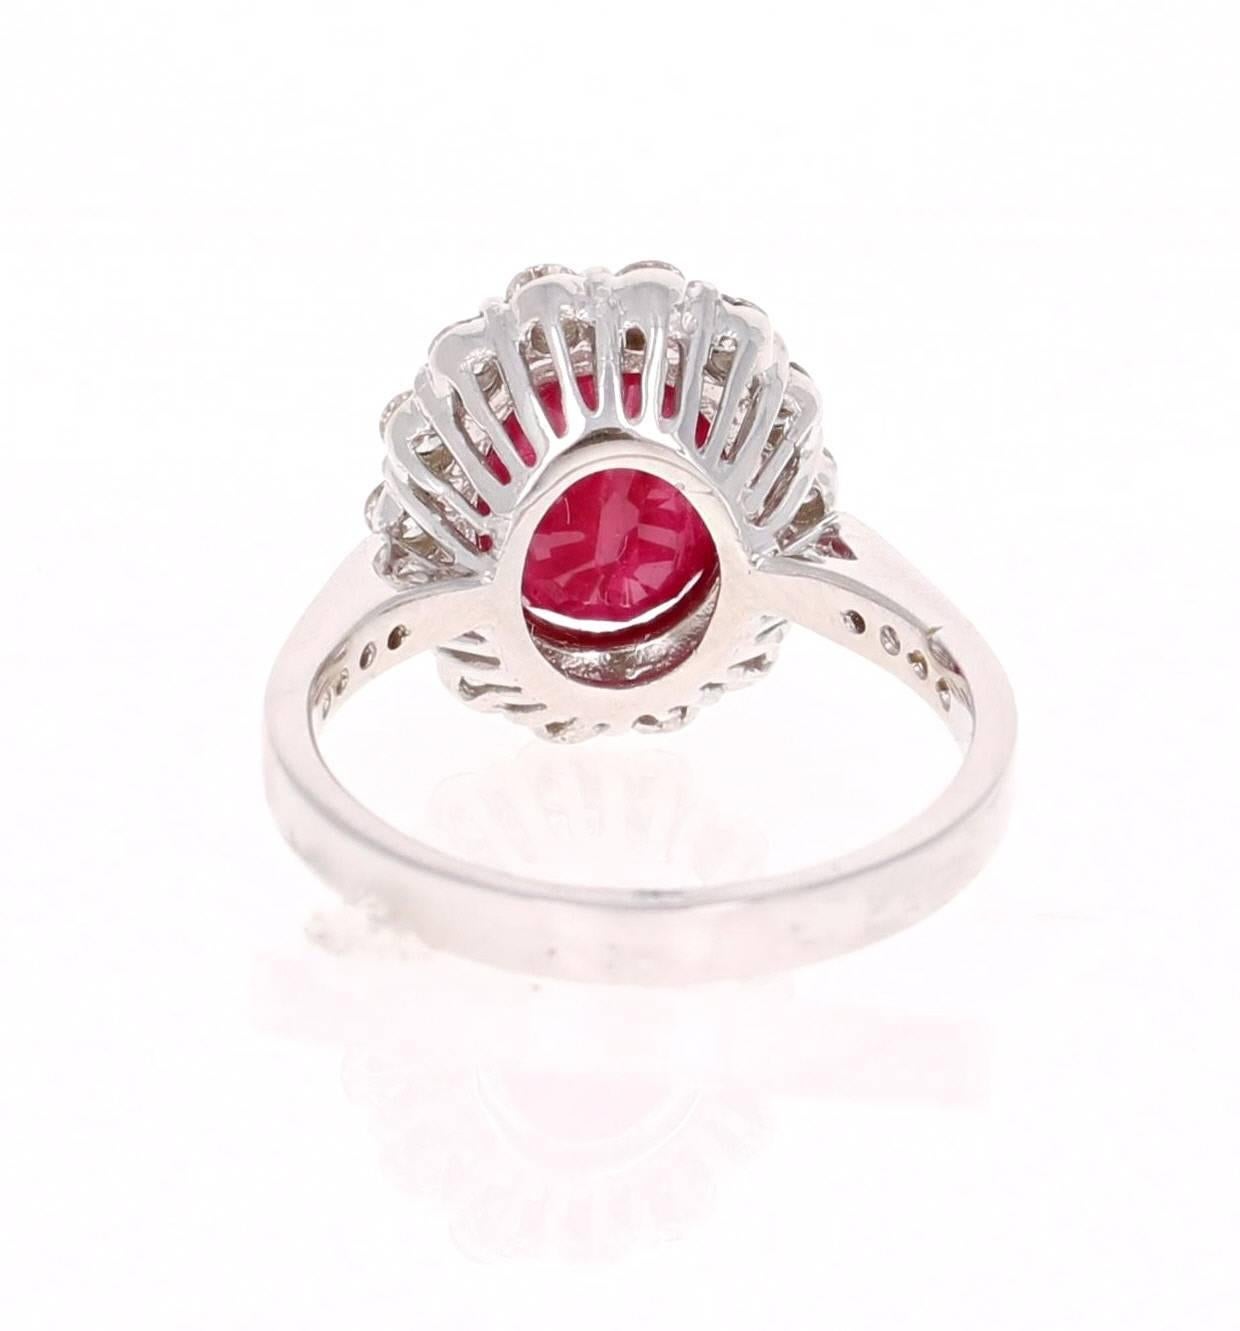 Modern 3.98 Carat Oval Cut Ruby Diamond White Gold Engagement Ring